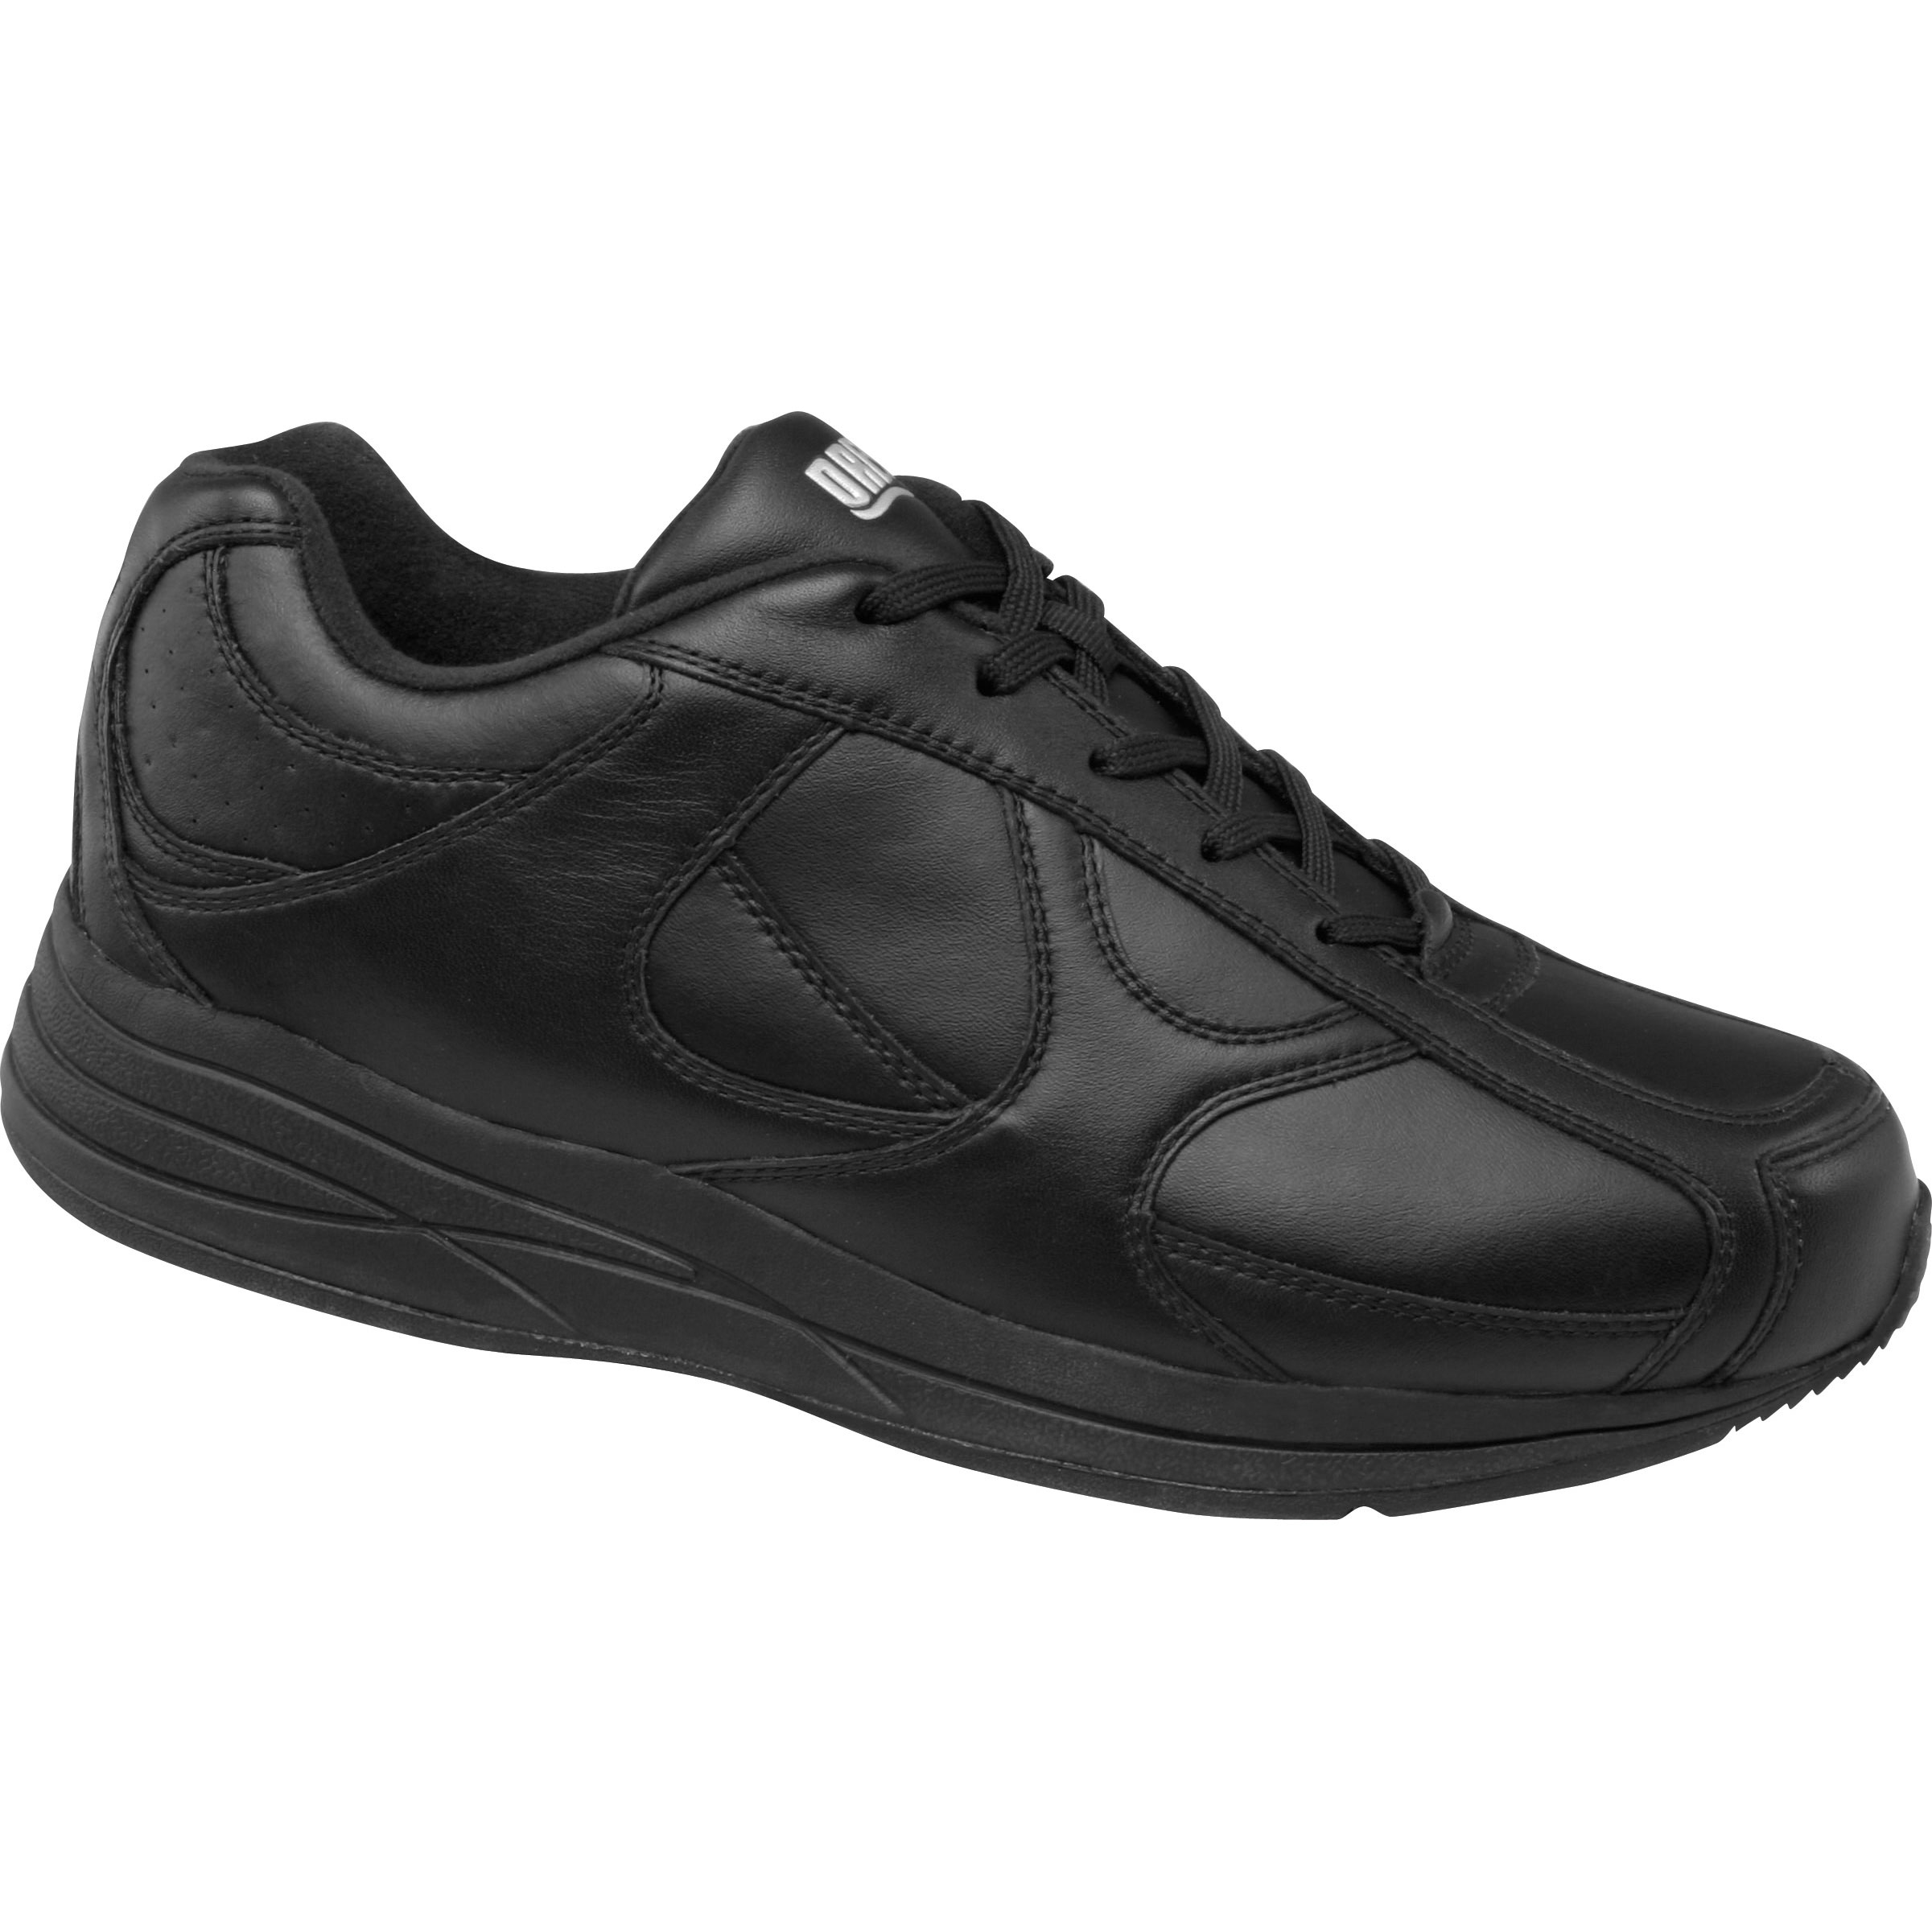 Drew® Surge Shoes for Men - Black Leather | Support Plus